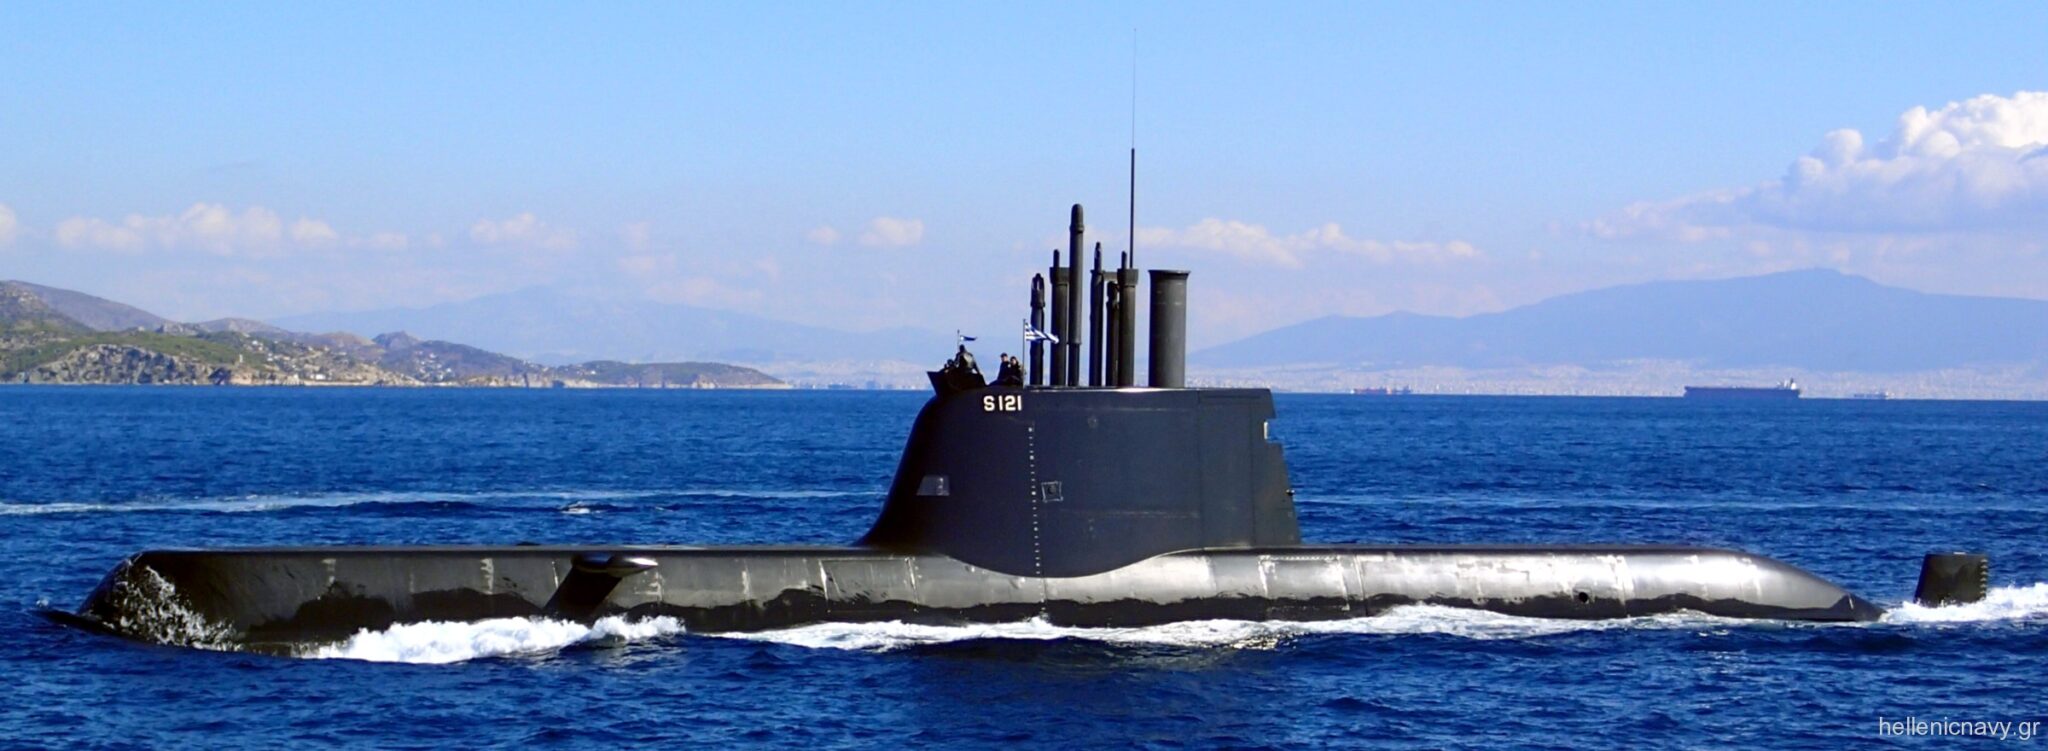 Виды пл. Подводная лодка типа 214. Подводная лодка 671 РТМК. Type 214 class Submarine. Лодки Type 214tn.